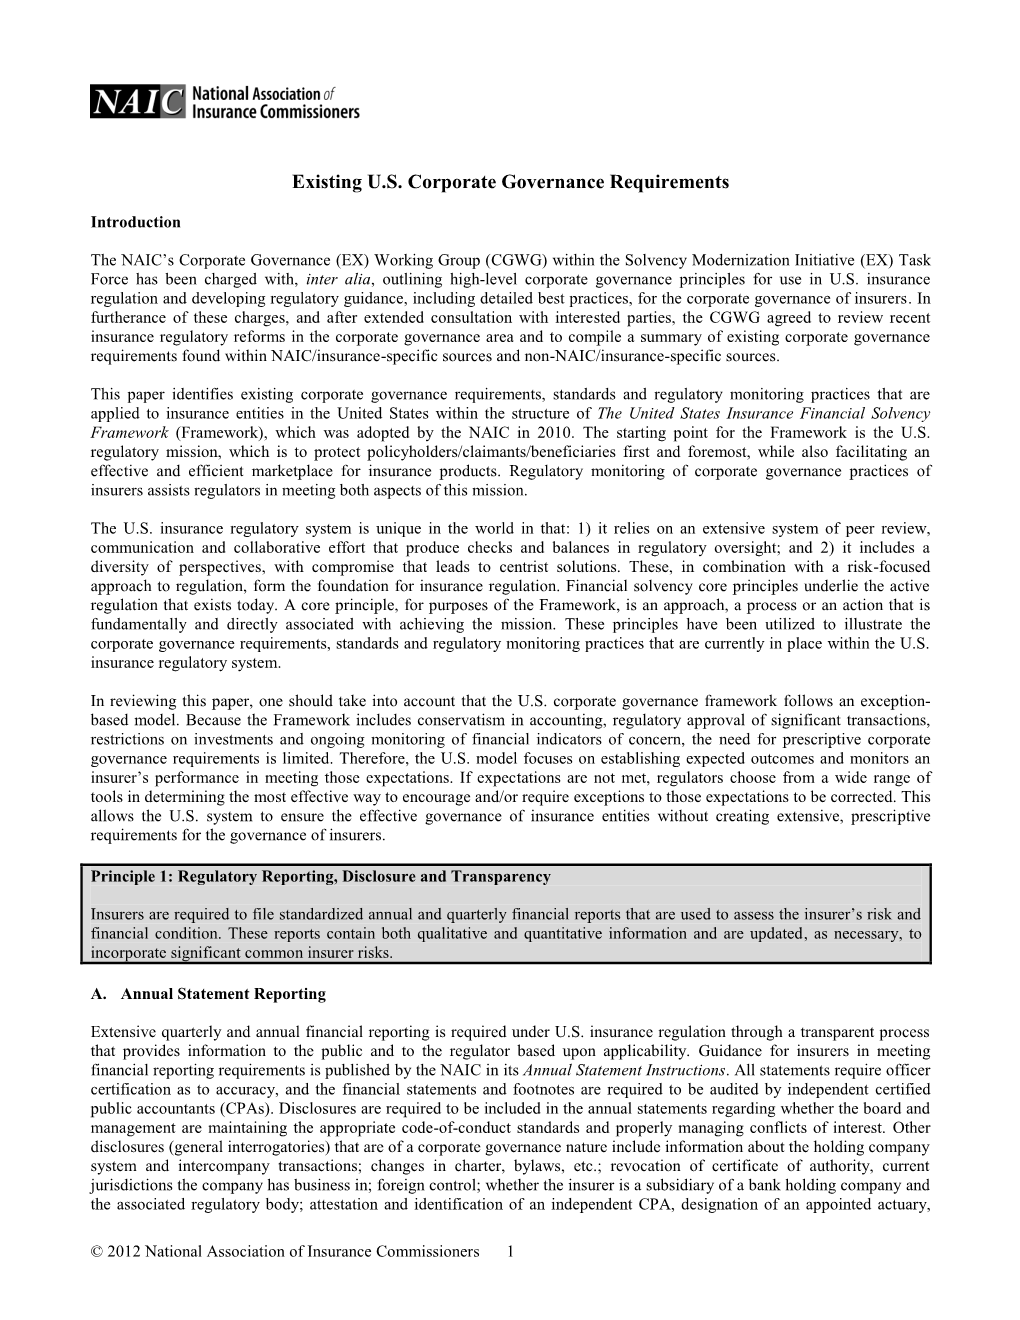 Corporate Governance & Risk Management Summary Comparison